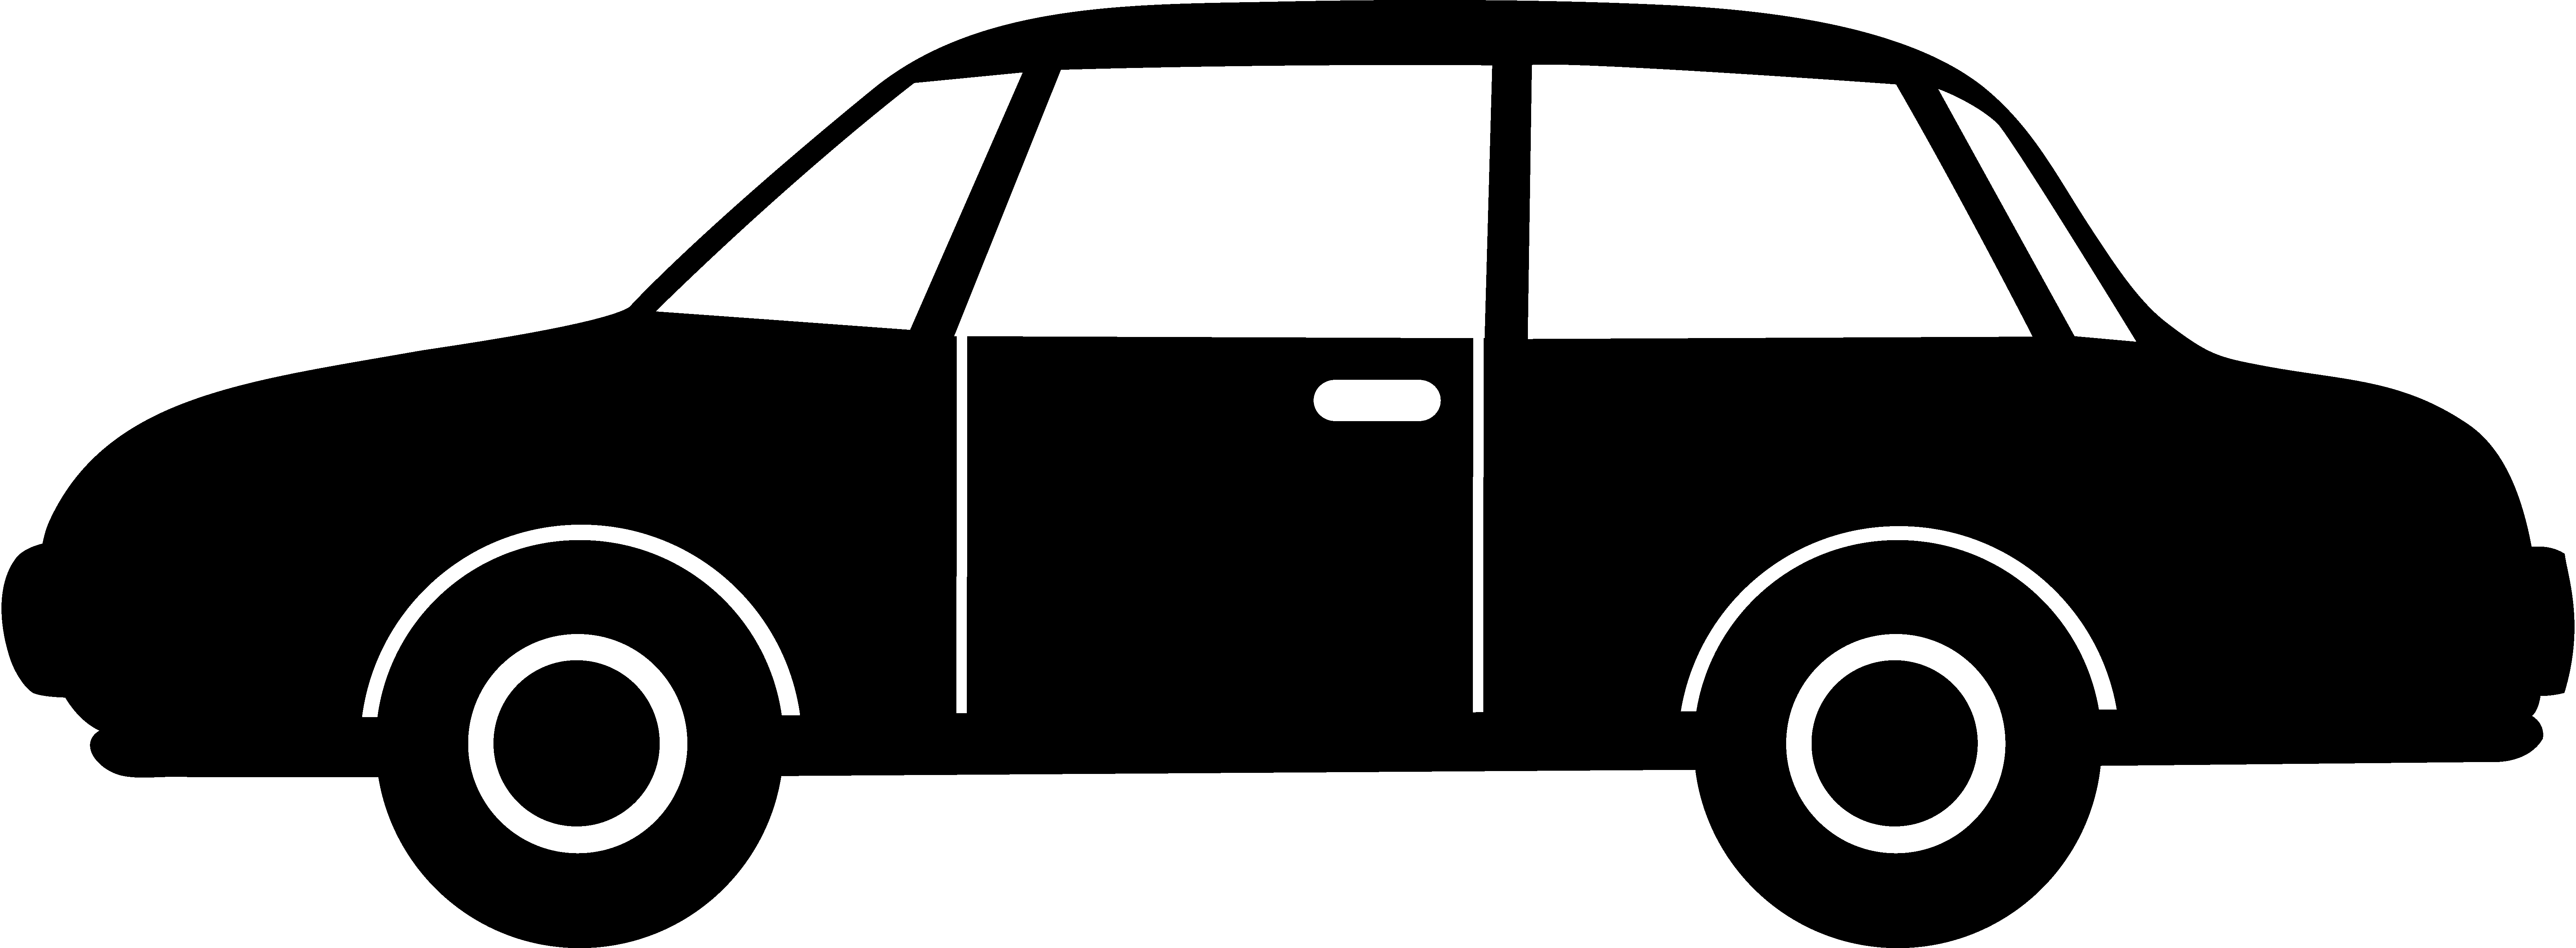 Black Car Silhouette - Free Clip Art